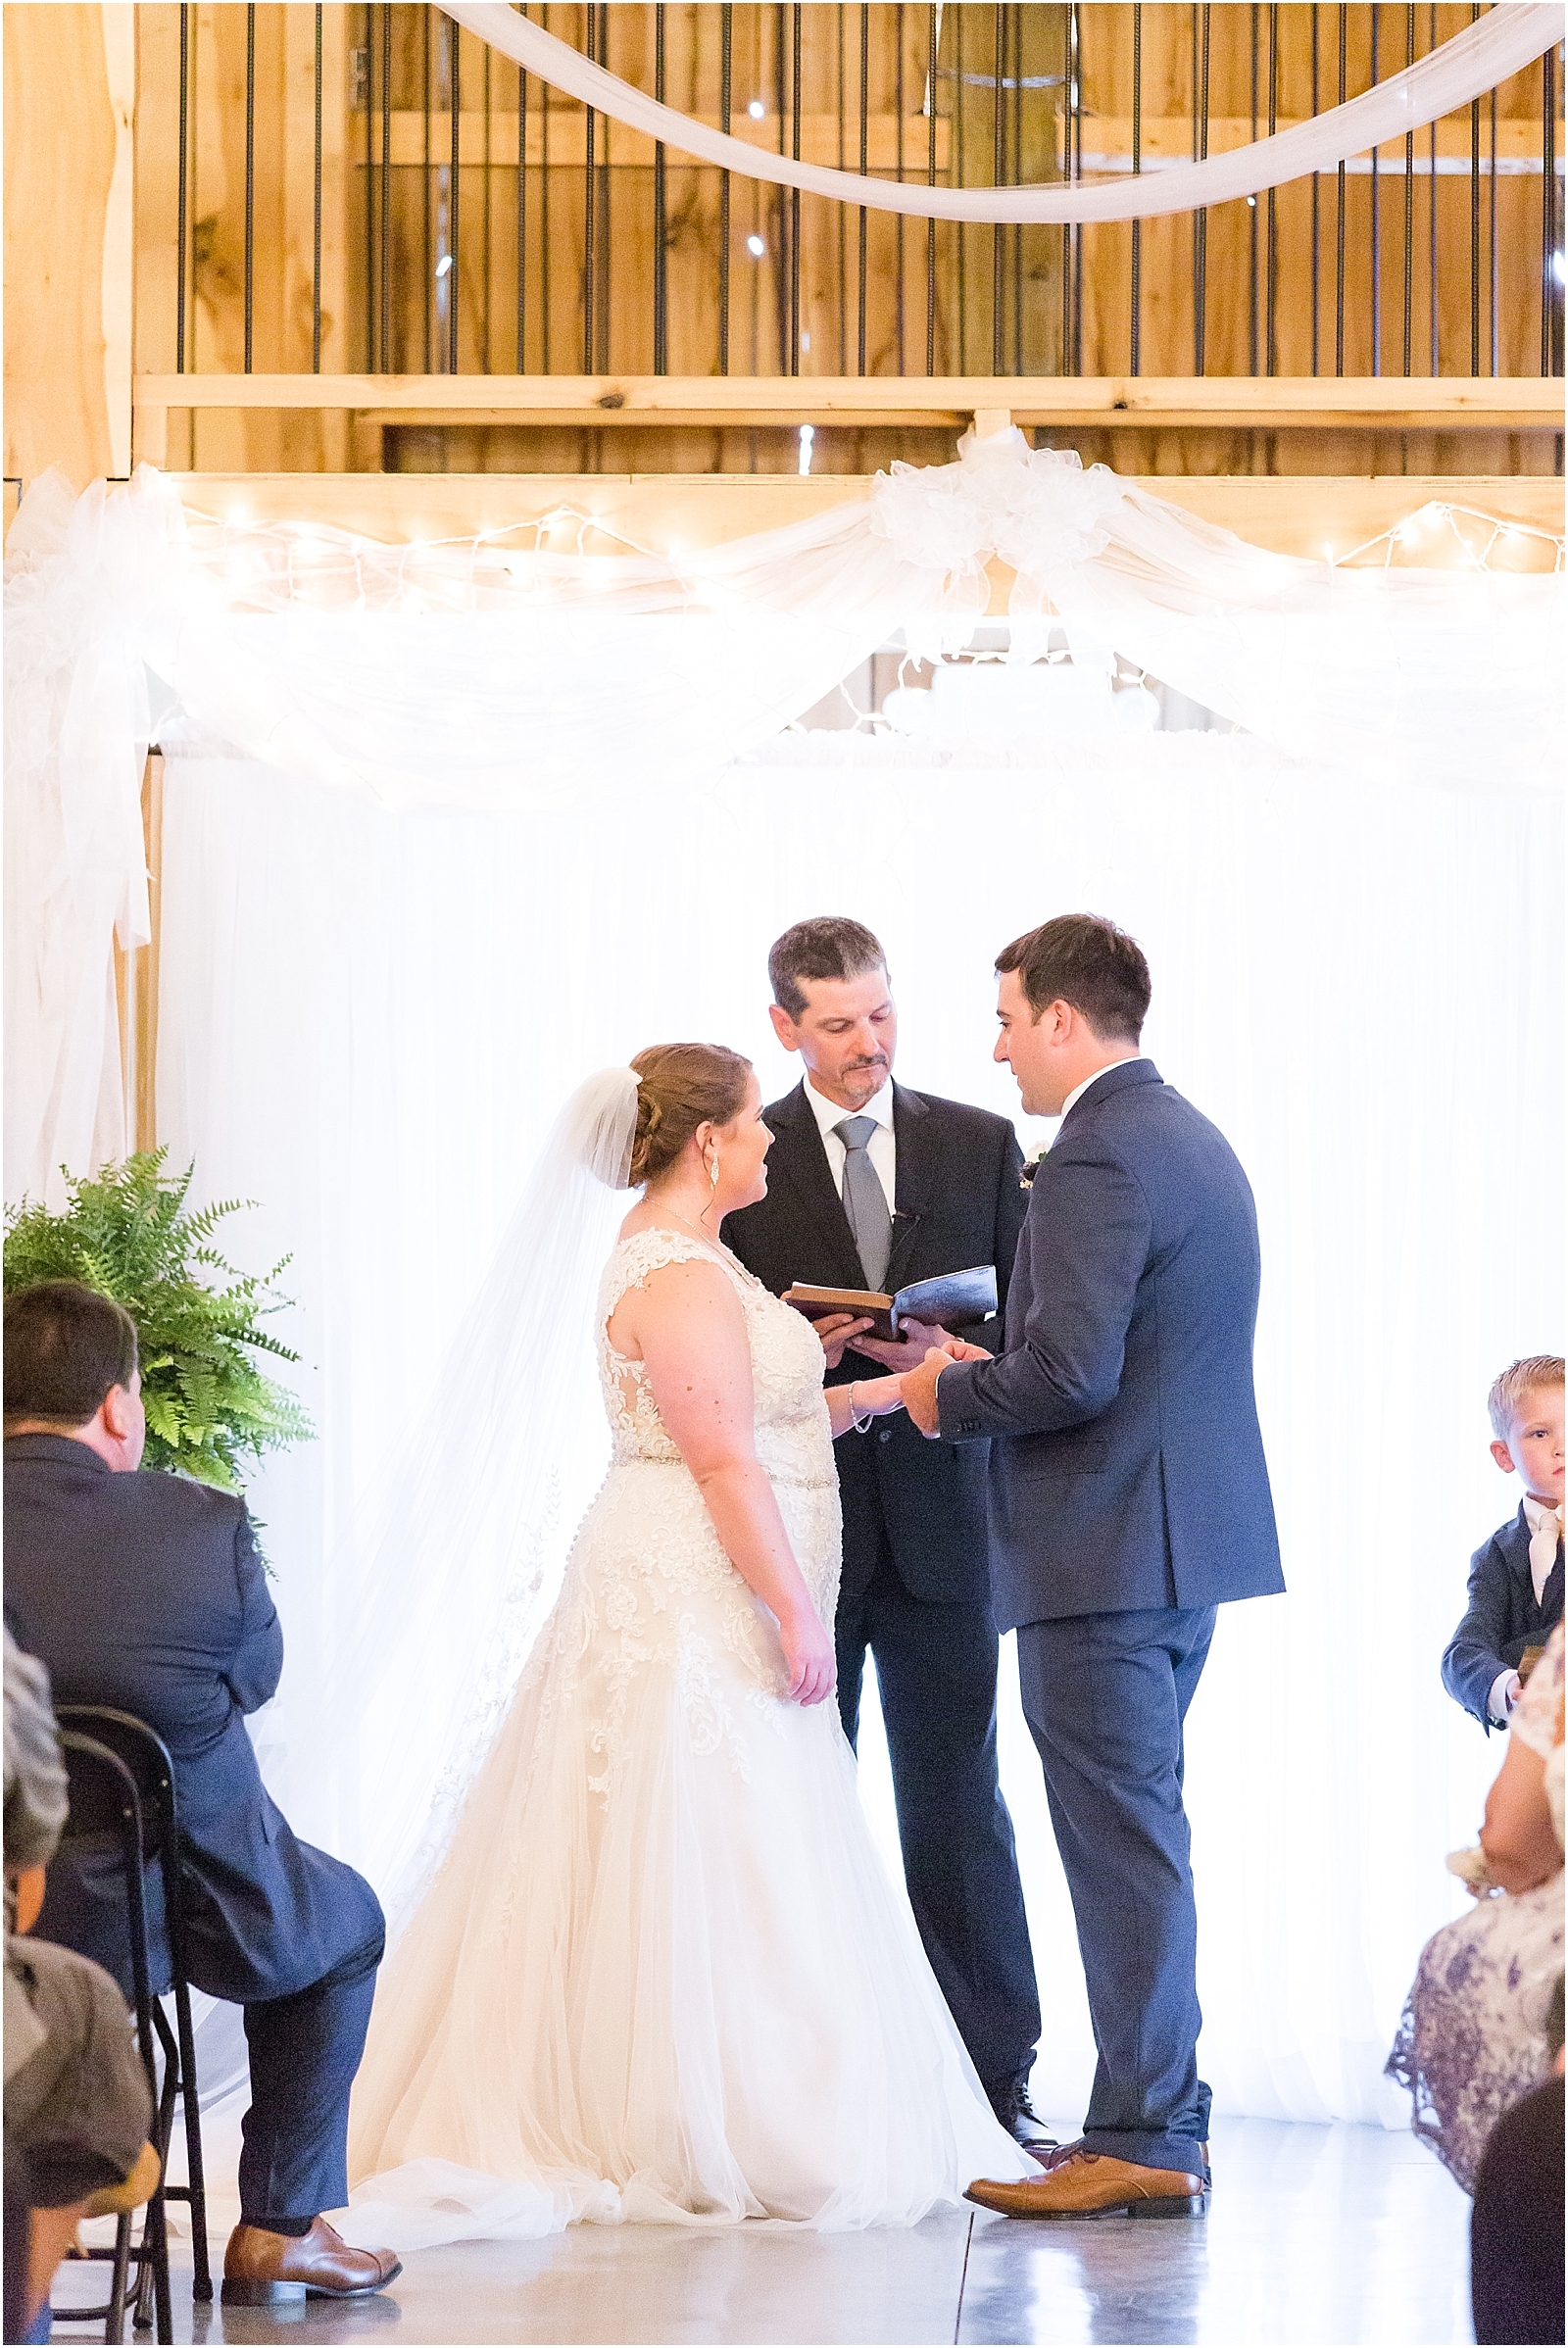 Rachel and Michael | Bret and Brandie Photography | Evansville Wedding Photographers 0064.jpg